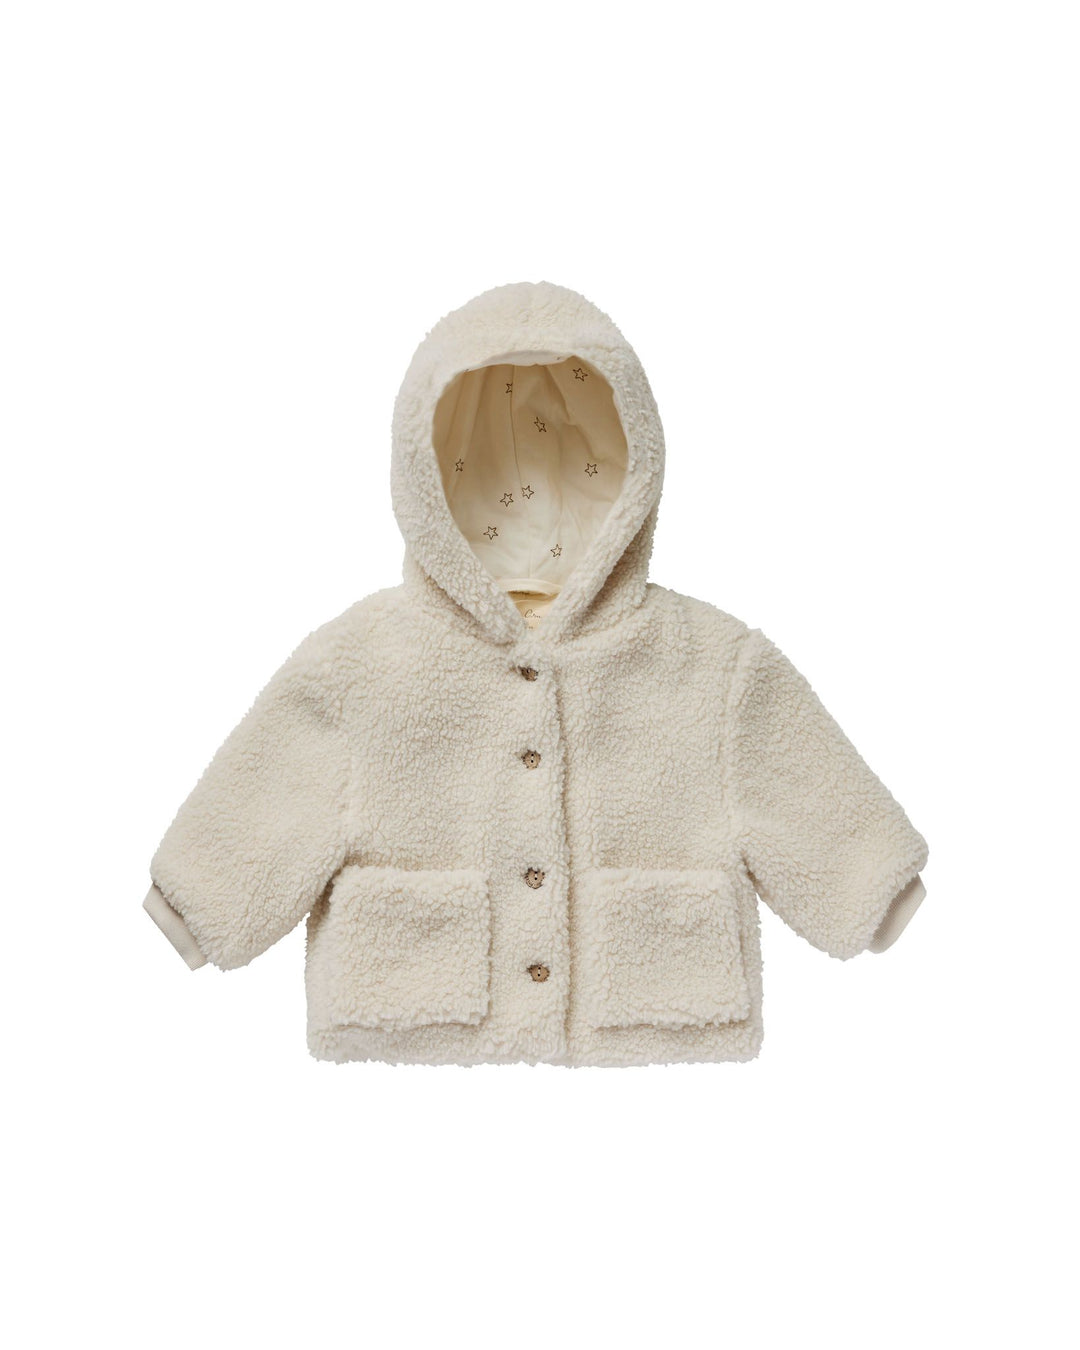 Rylee & Cru Shearling Baby Coat in Natural